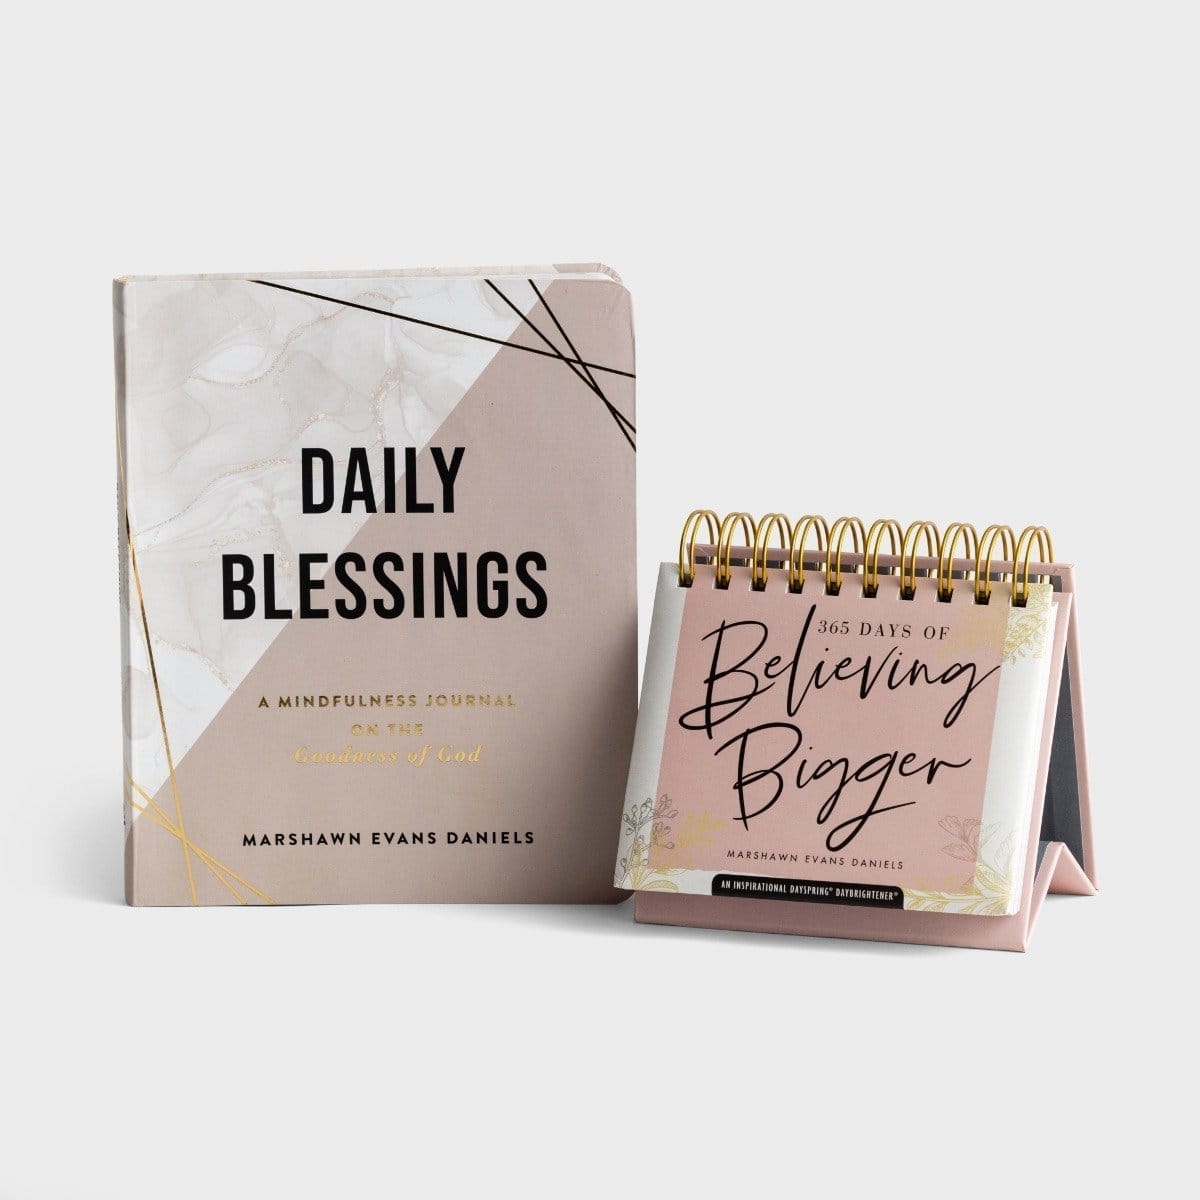 Marshawn Evans Daniels - Daily Blessings Devotional Journal and Believing Bigger DayBrightener - Gift Set